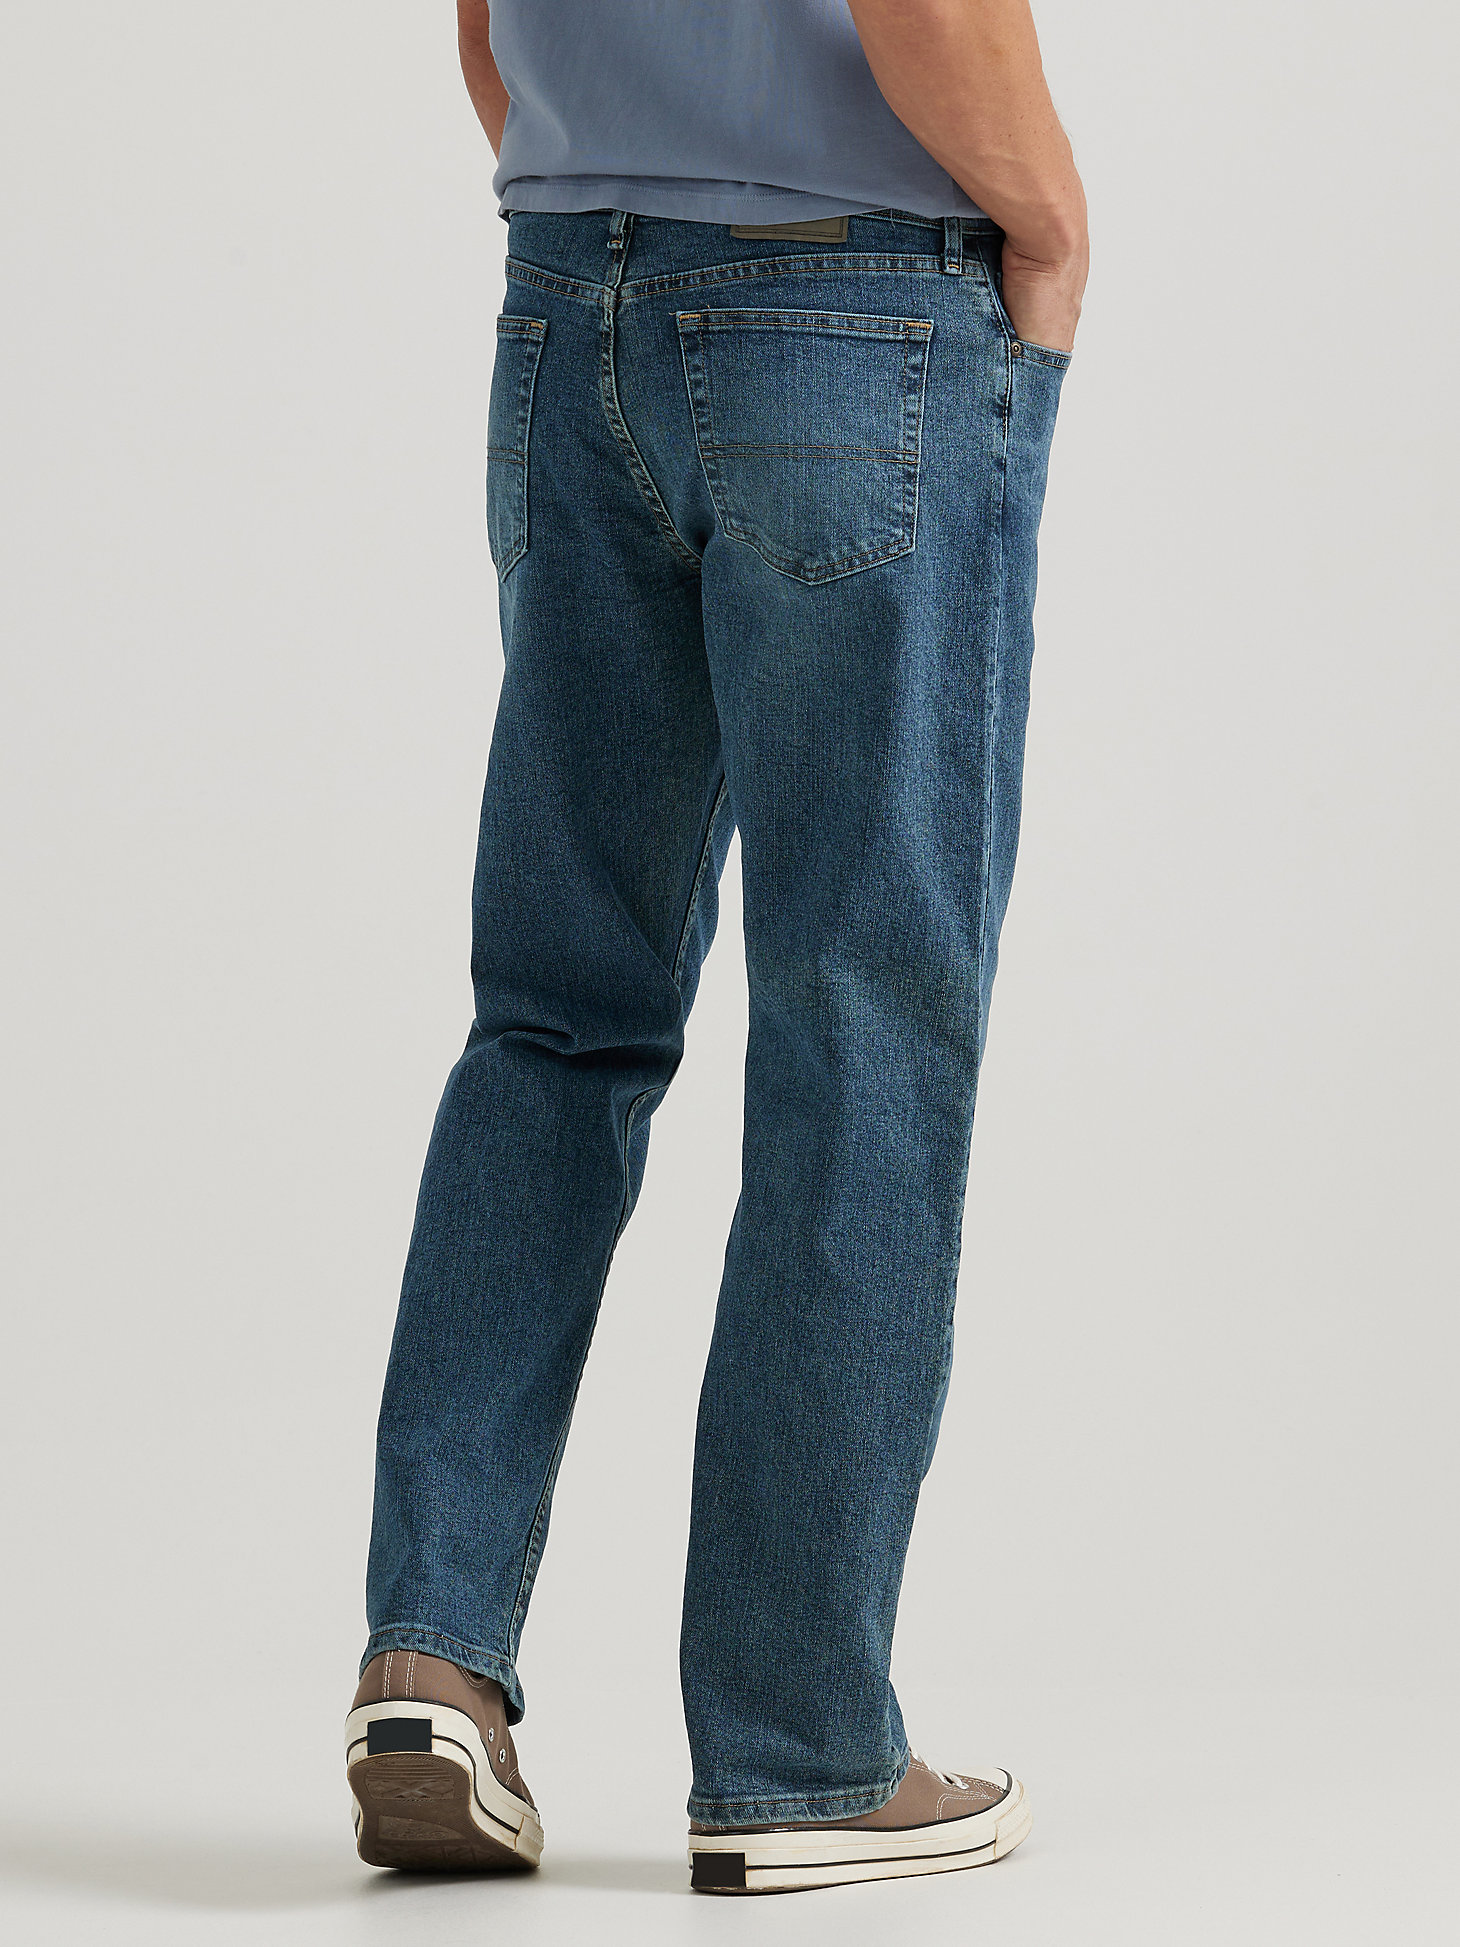 Wrangler Authentics Men's Relaxed Fit Comfort Flex Jean in Smoke